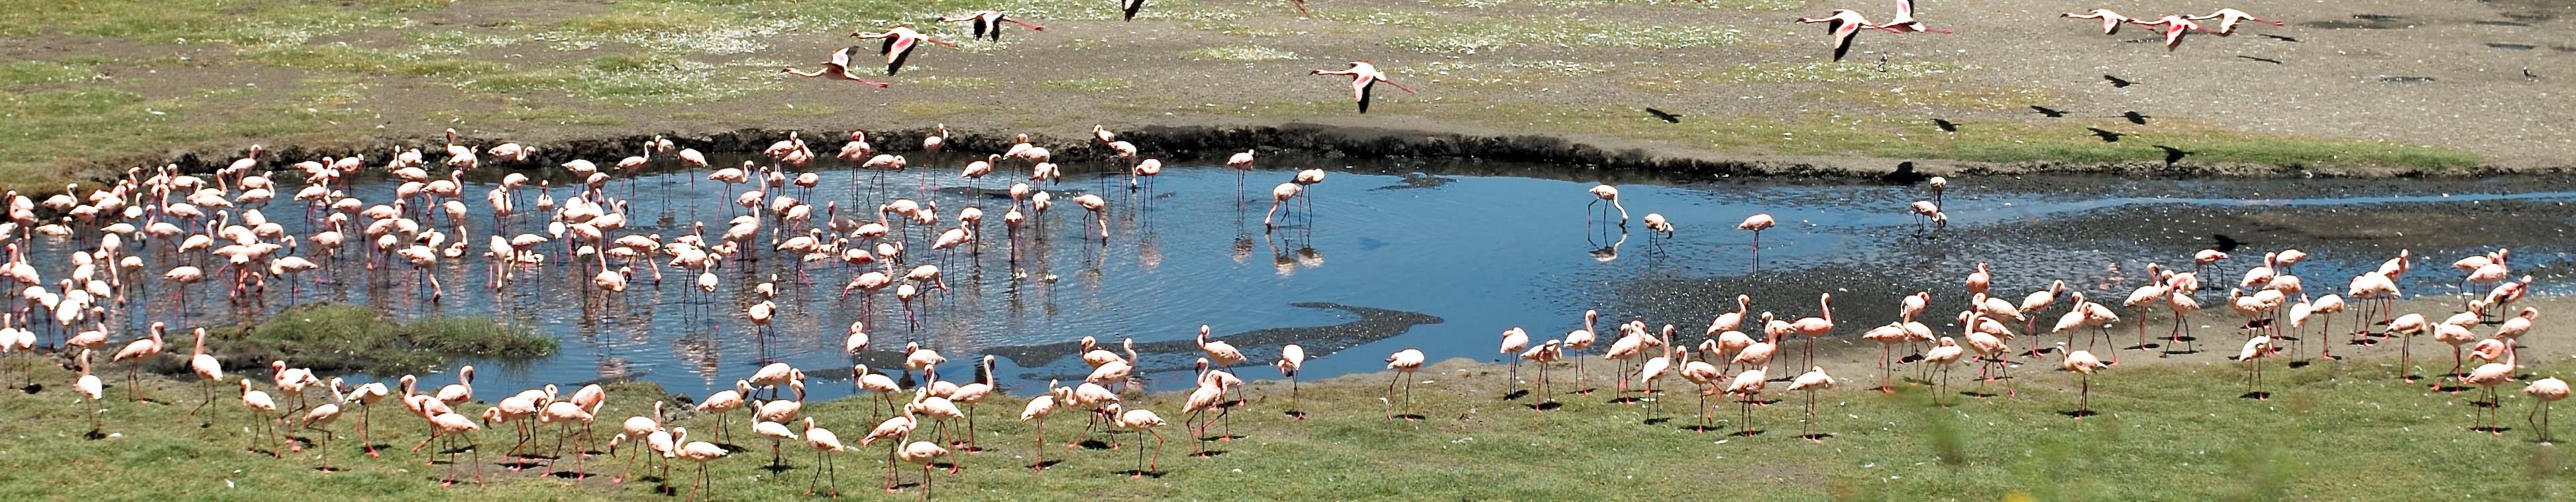 Flamingos in Arusha National Park | Wikimedia